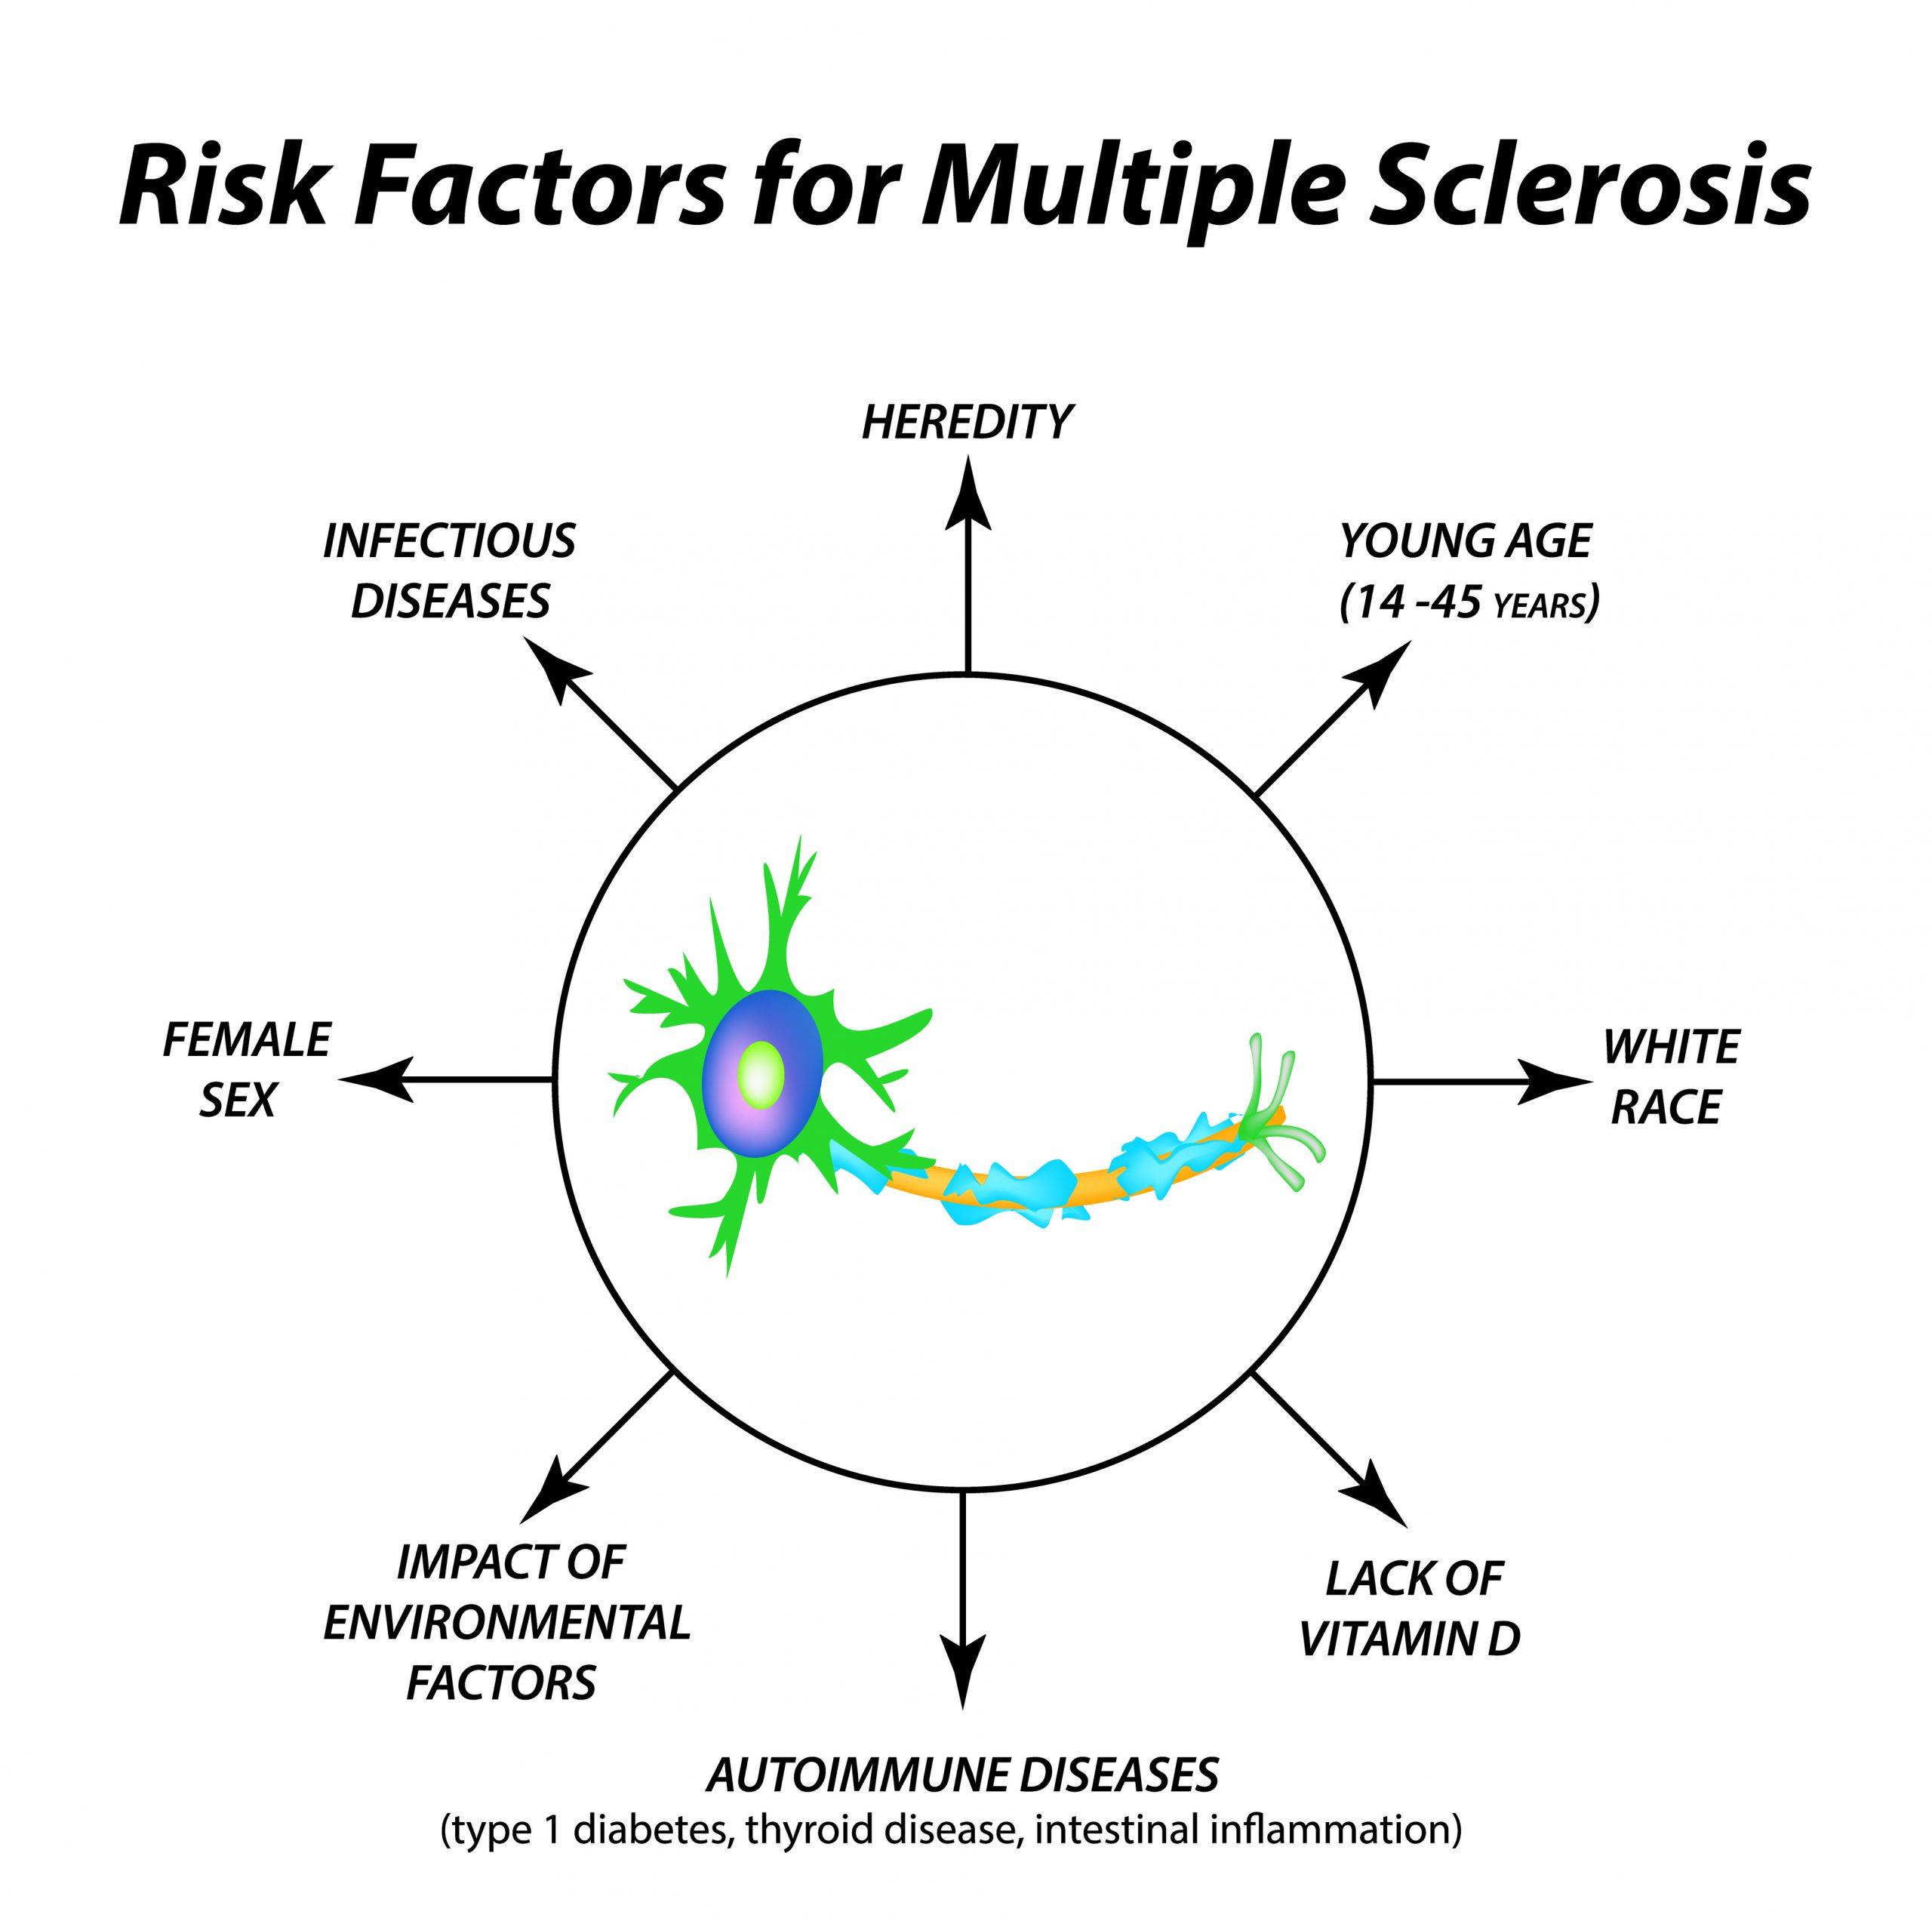 Risk factors for multiple sclerosis